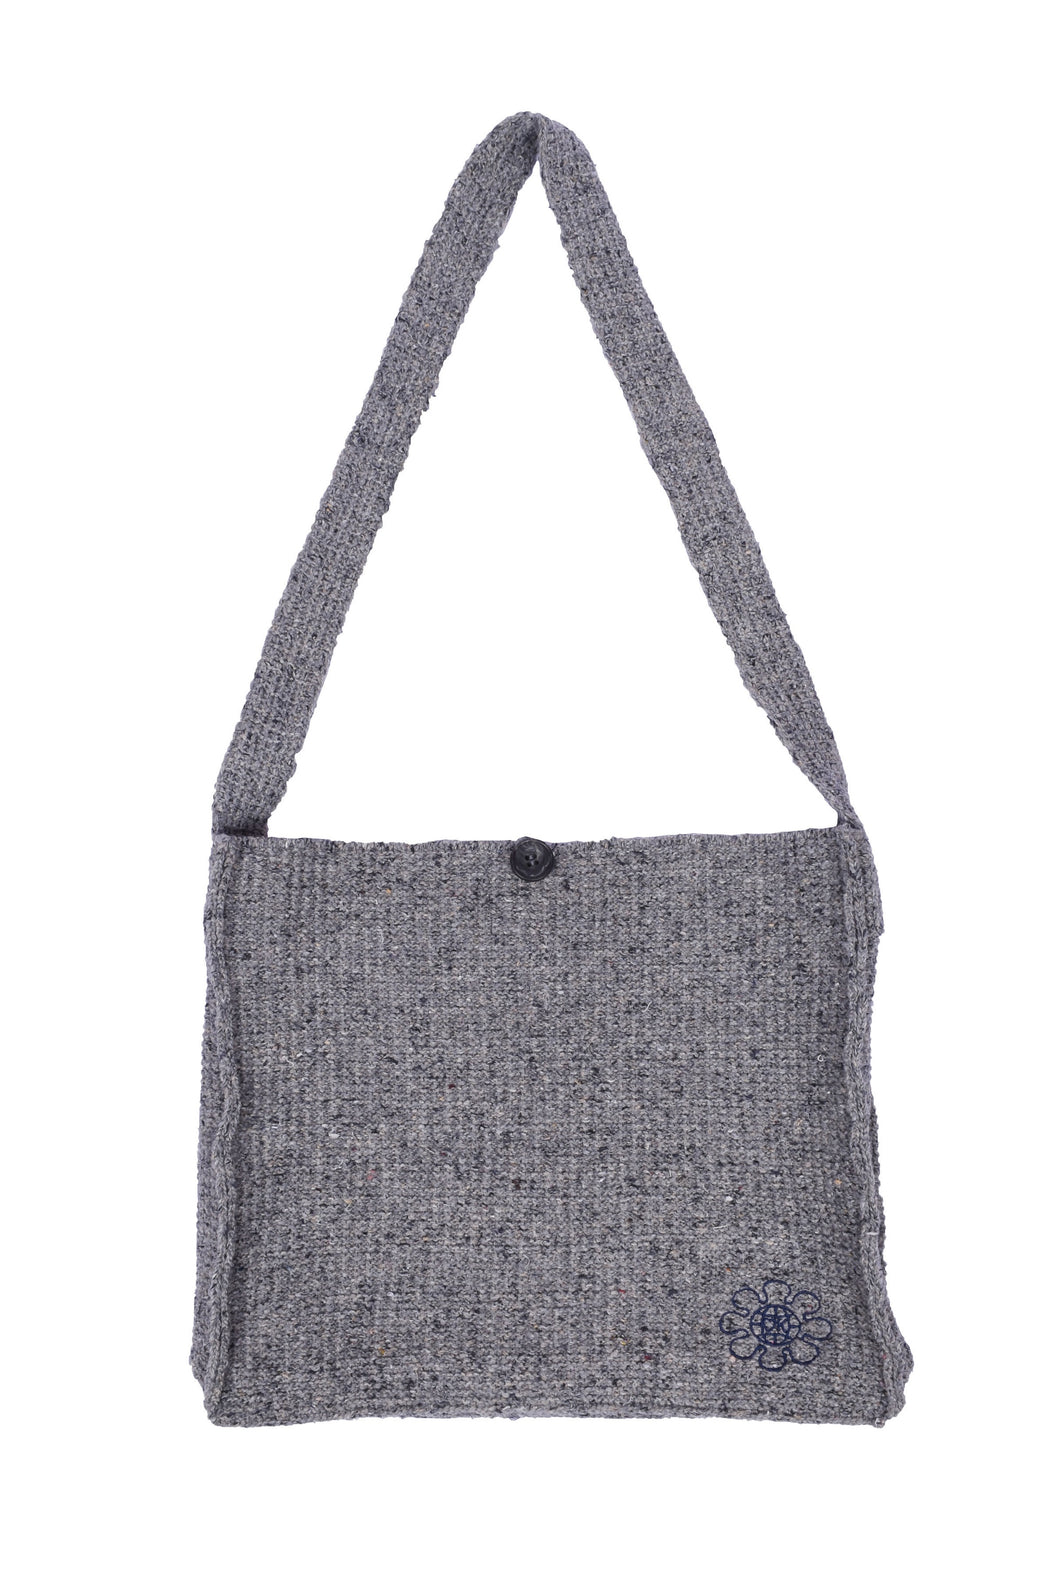 RE knit shoulder bag (White Gray × Navy)